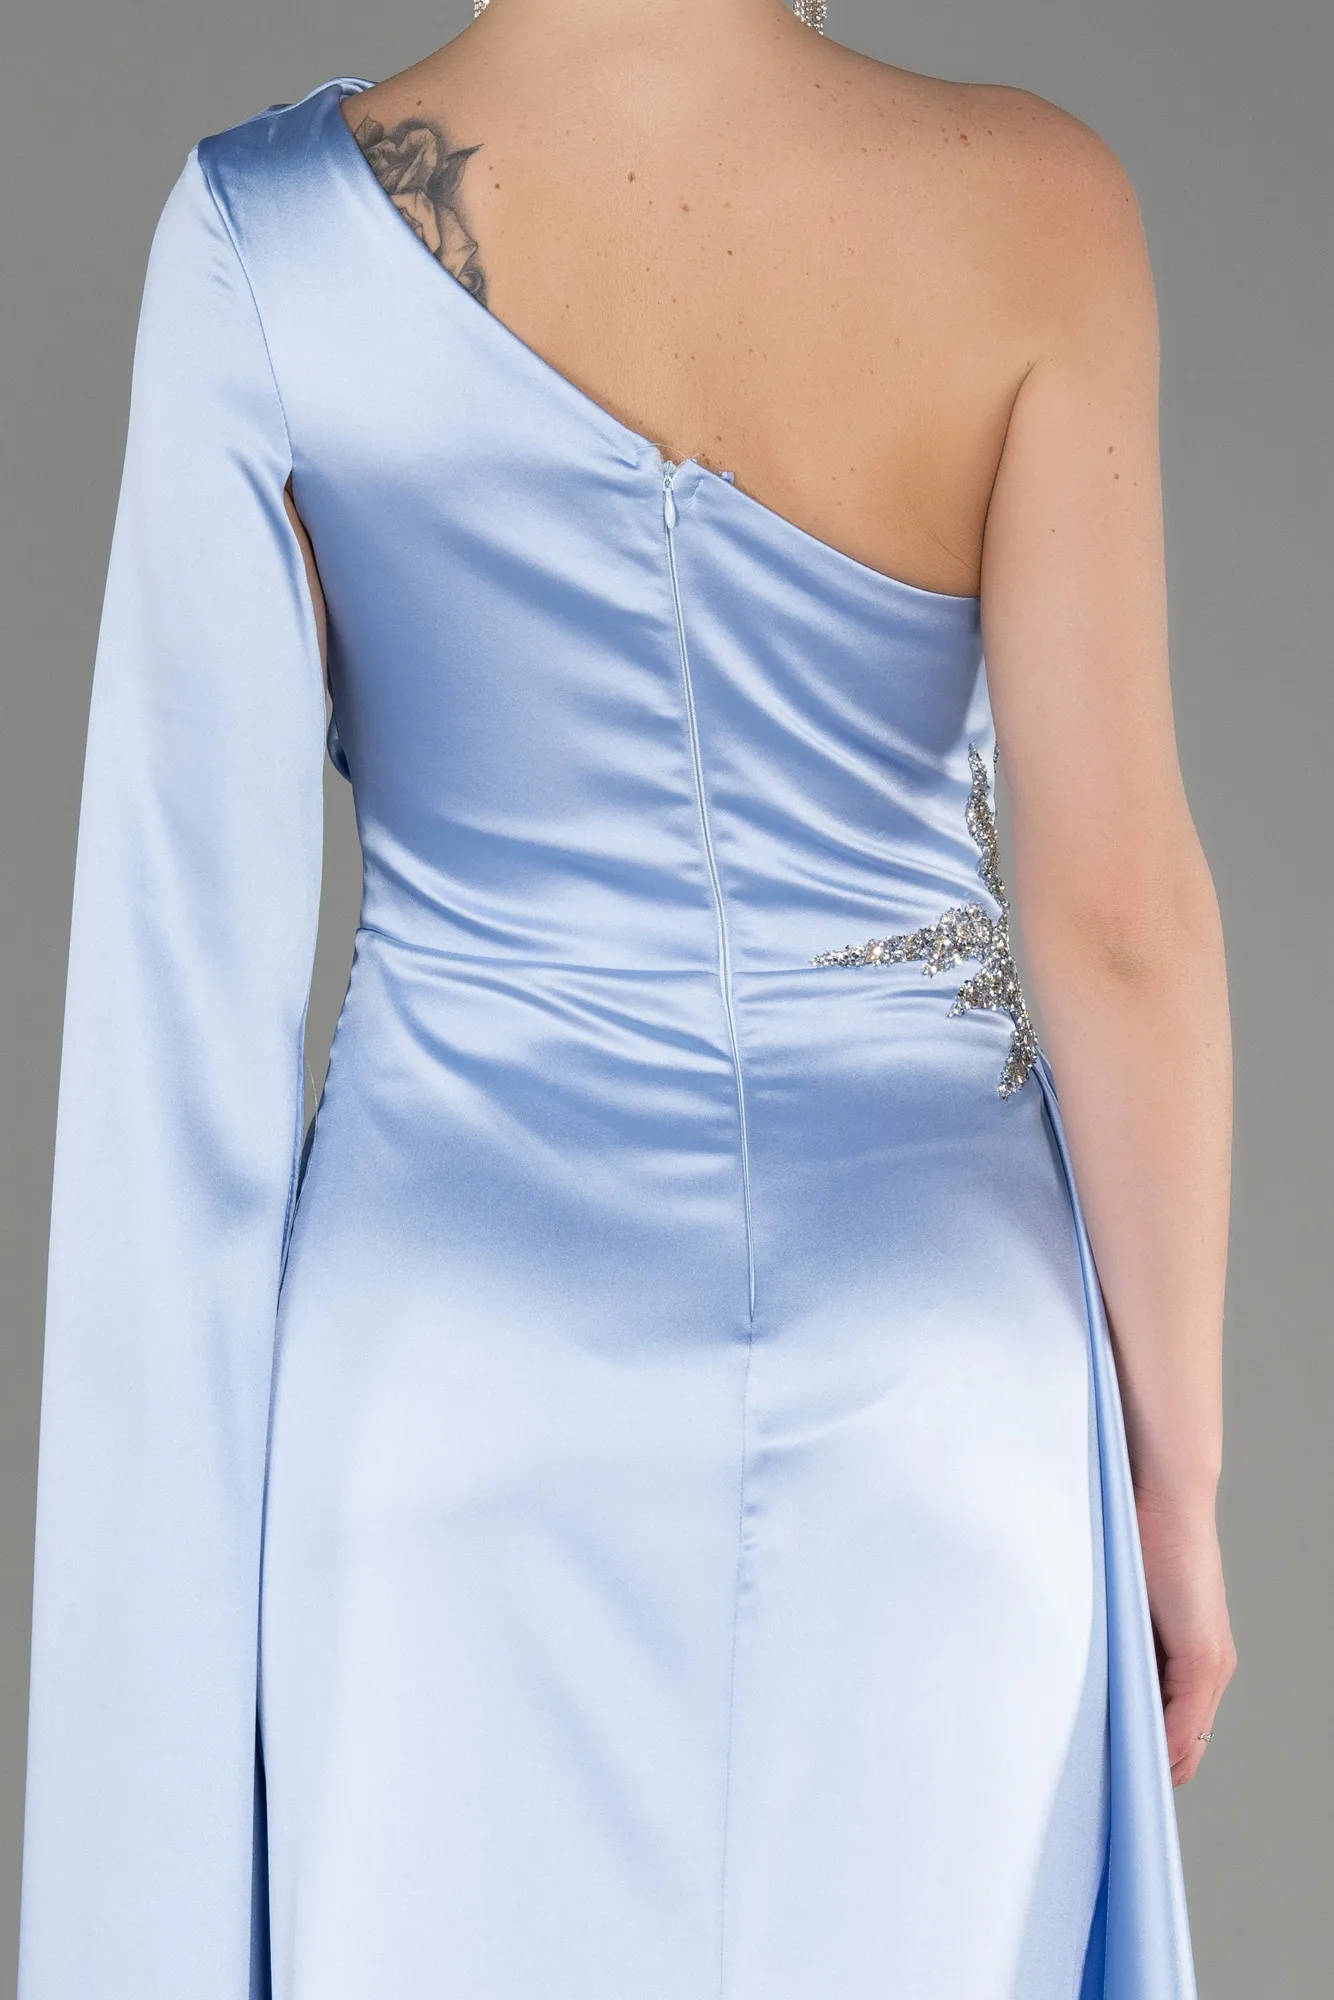 Ice Blue-Long Satin Evening Dress ABU3545